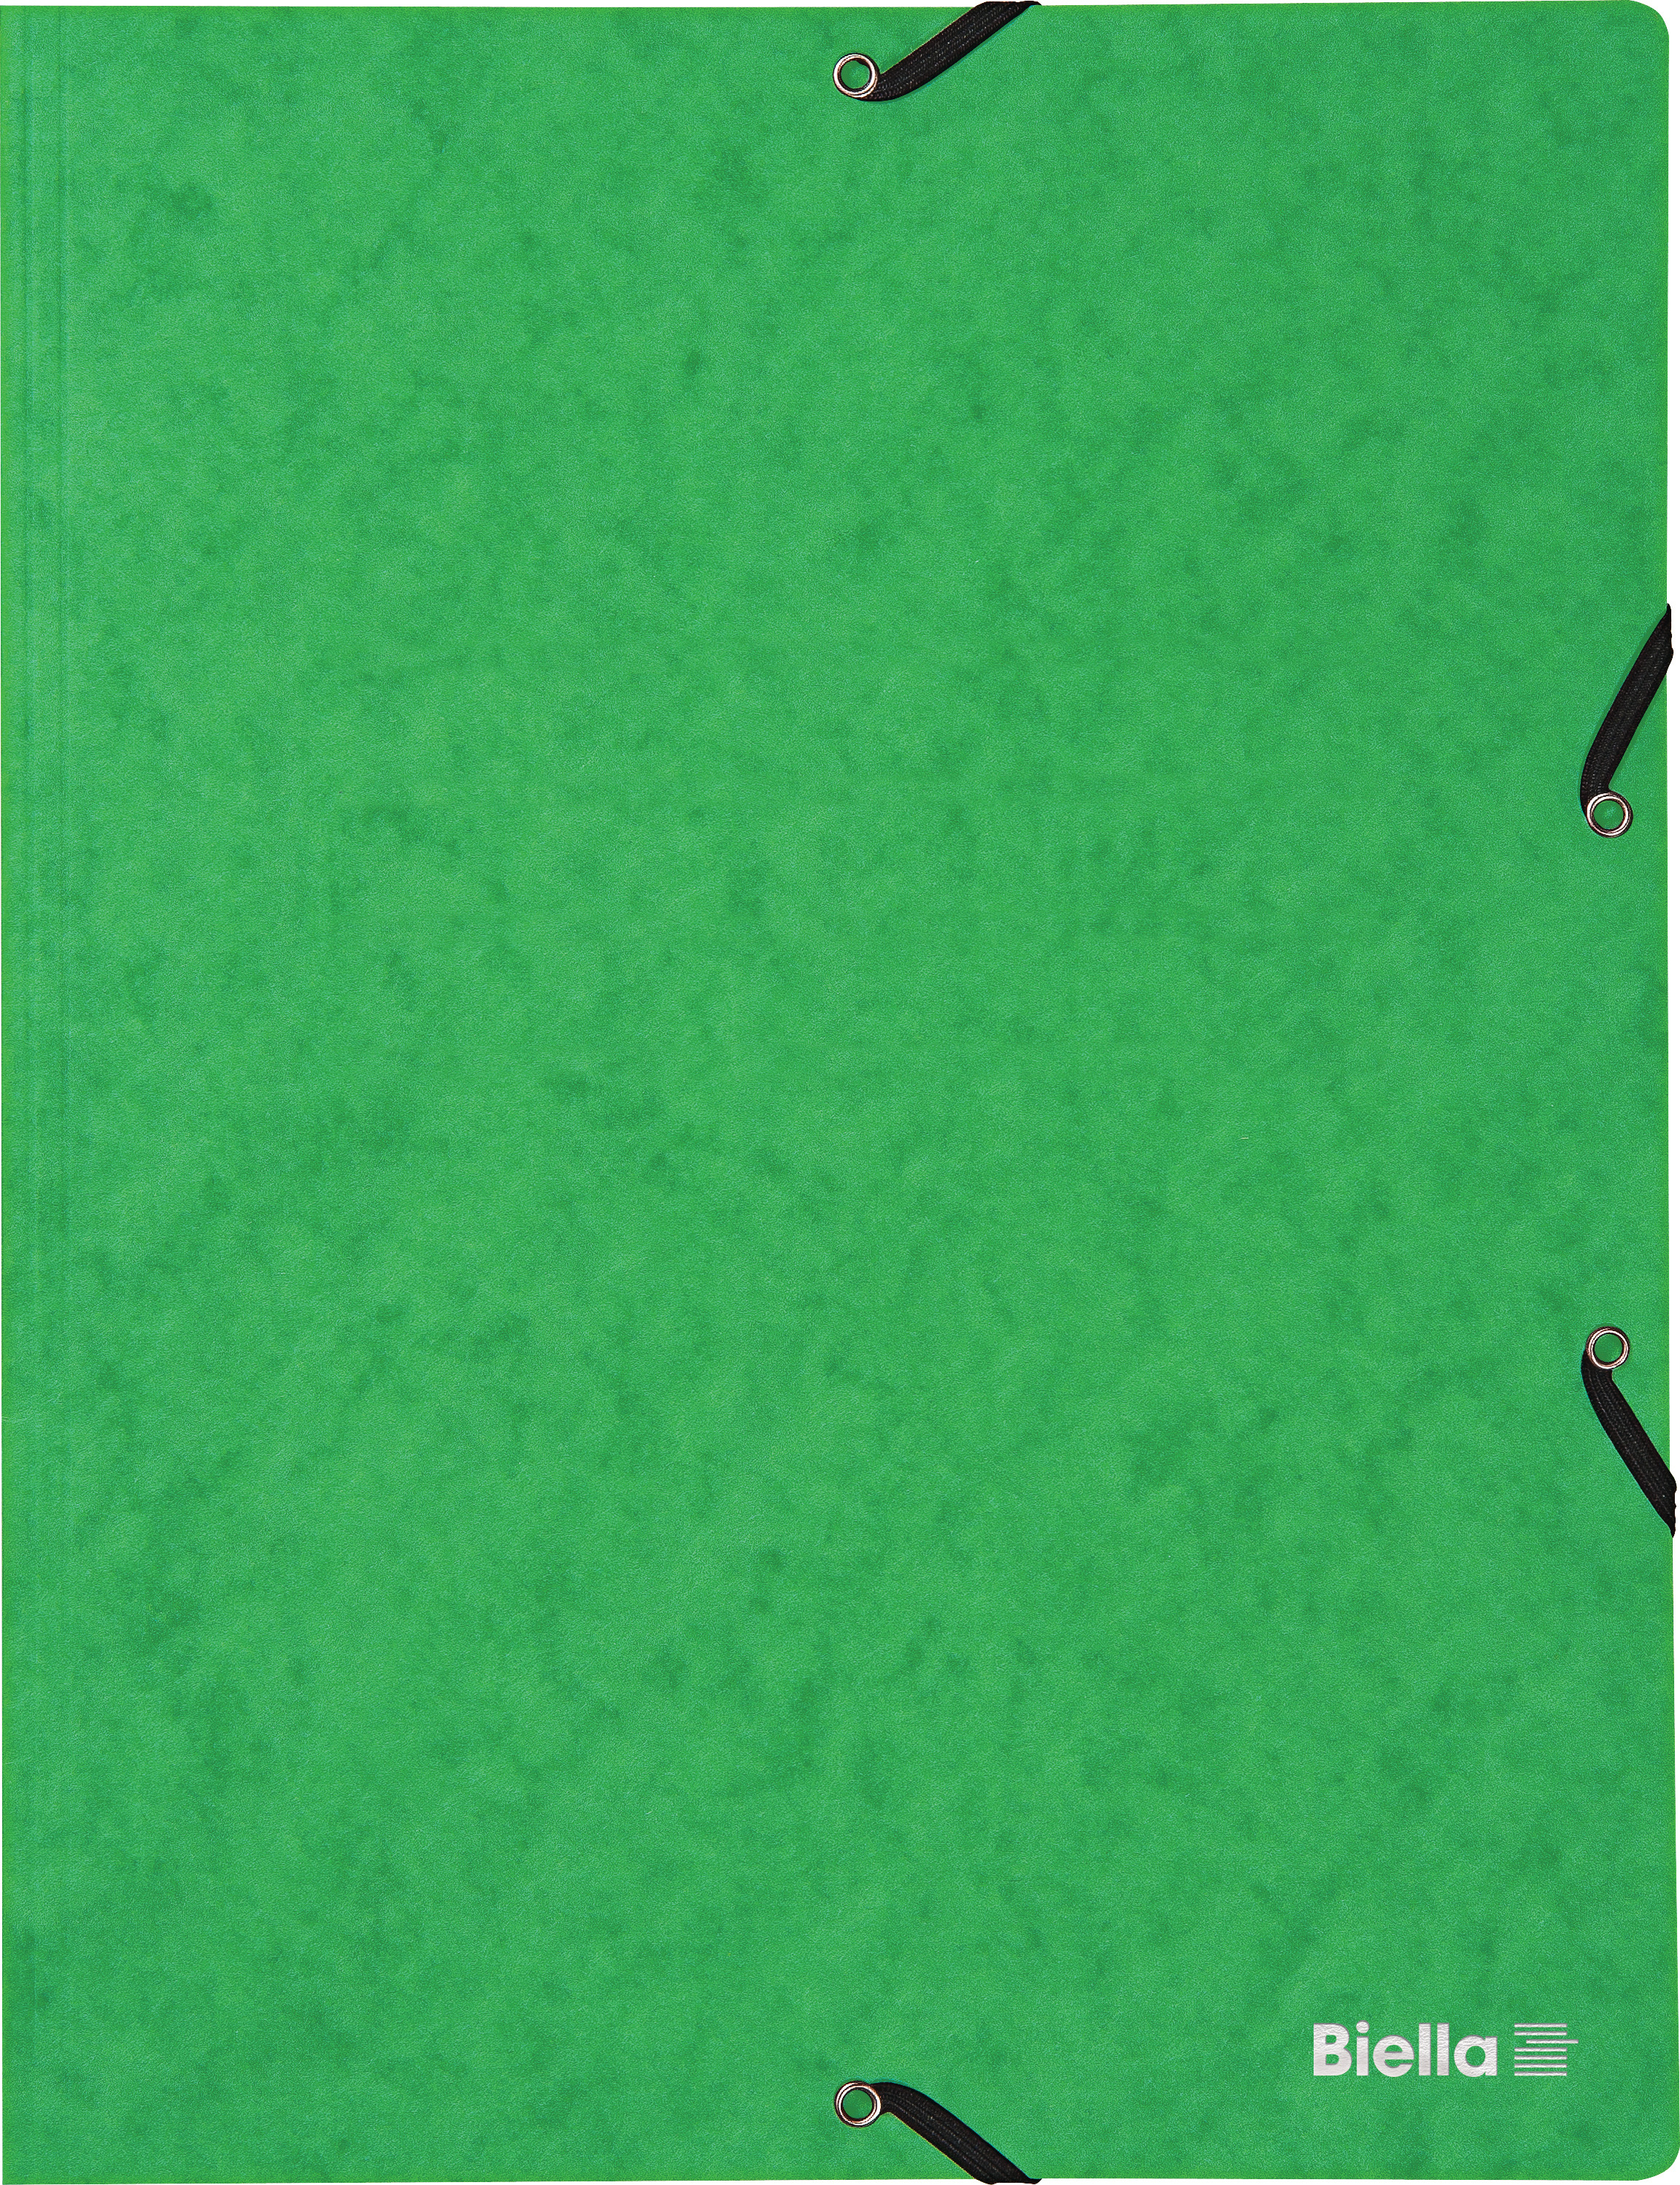 BIELLA Dossier ferm. Élastique A4 17840130U vert, 355gm2 200 flls.